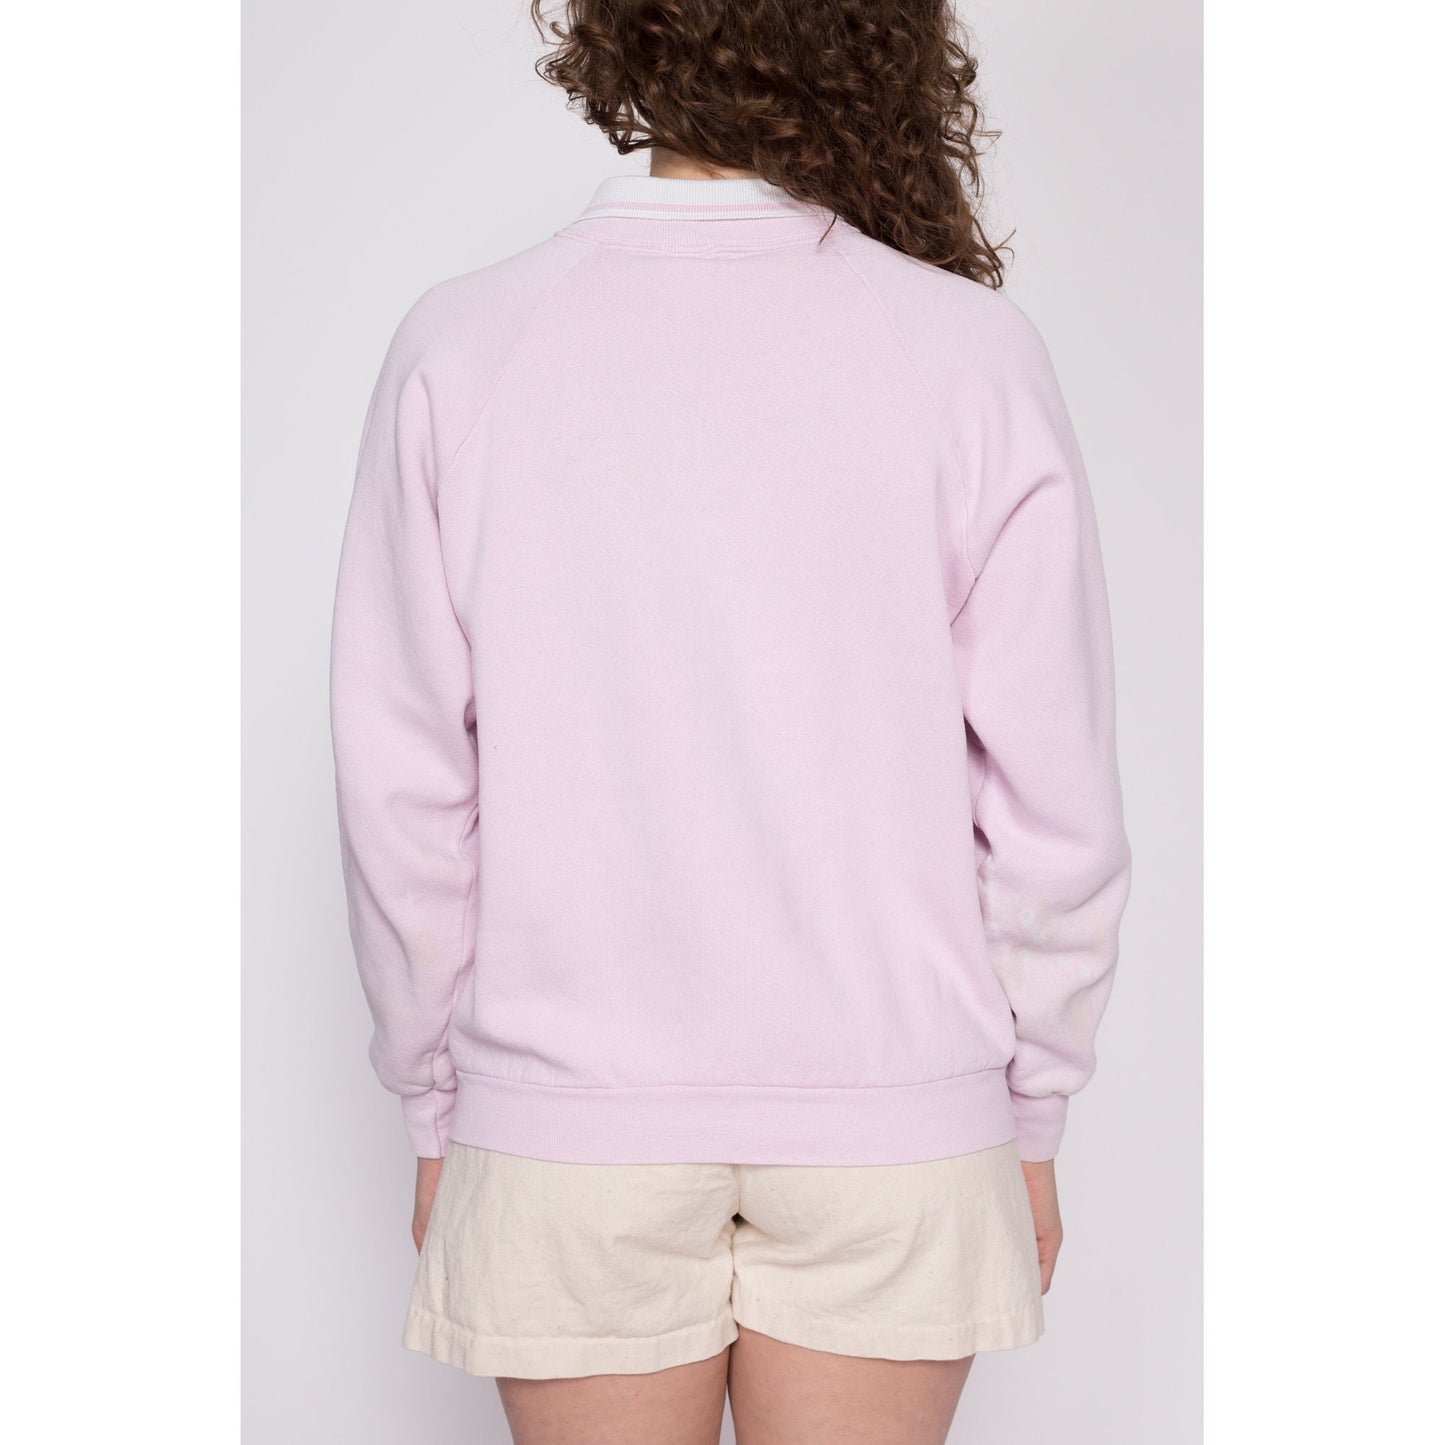 90s Tulip Flower Print Collared Sweatshirt - Large | Vintage Pink Floral Graphic Raglan Sleeve Pullover